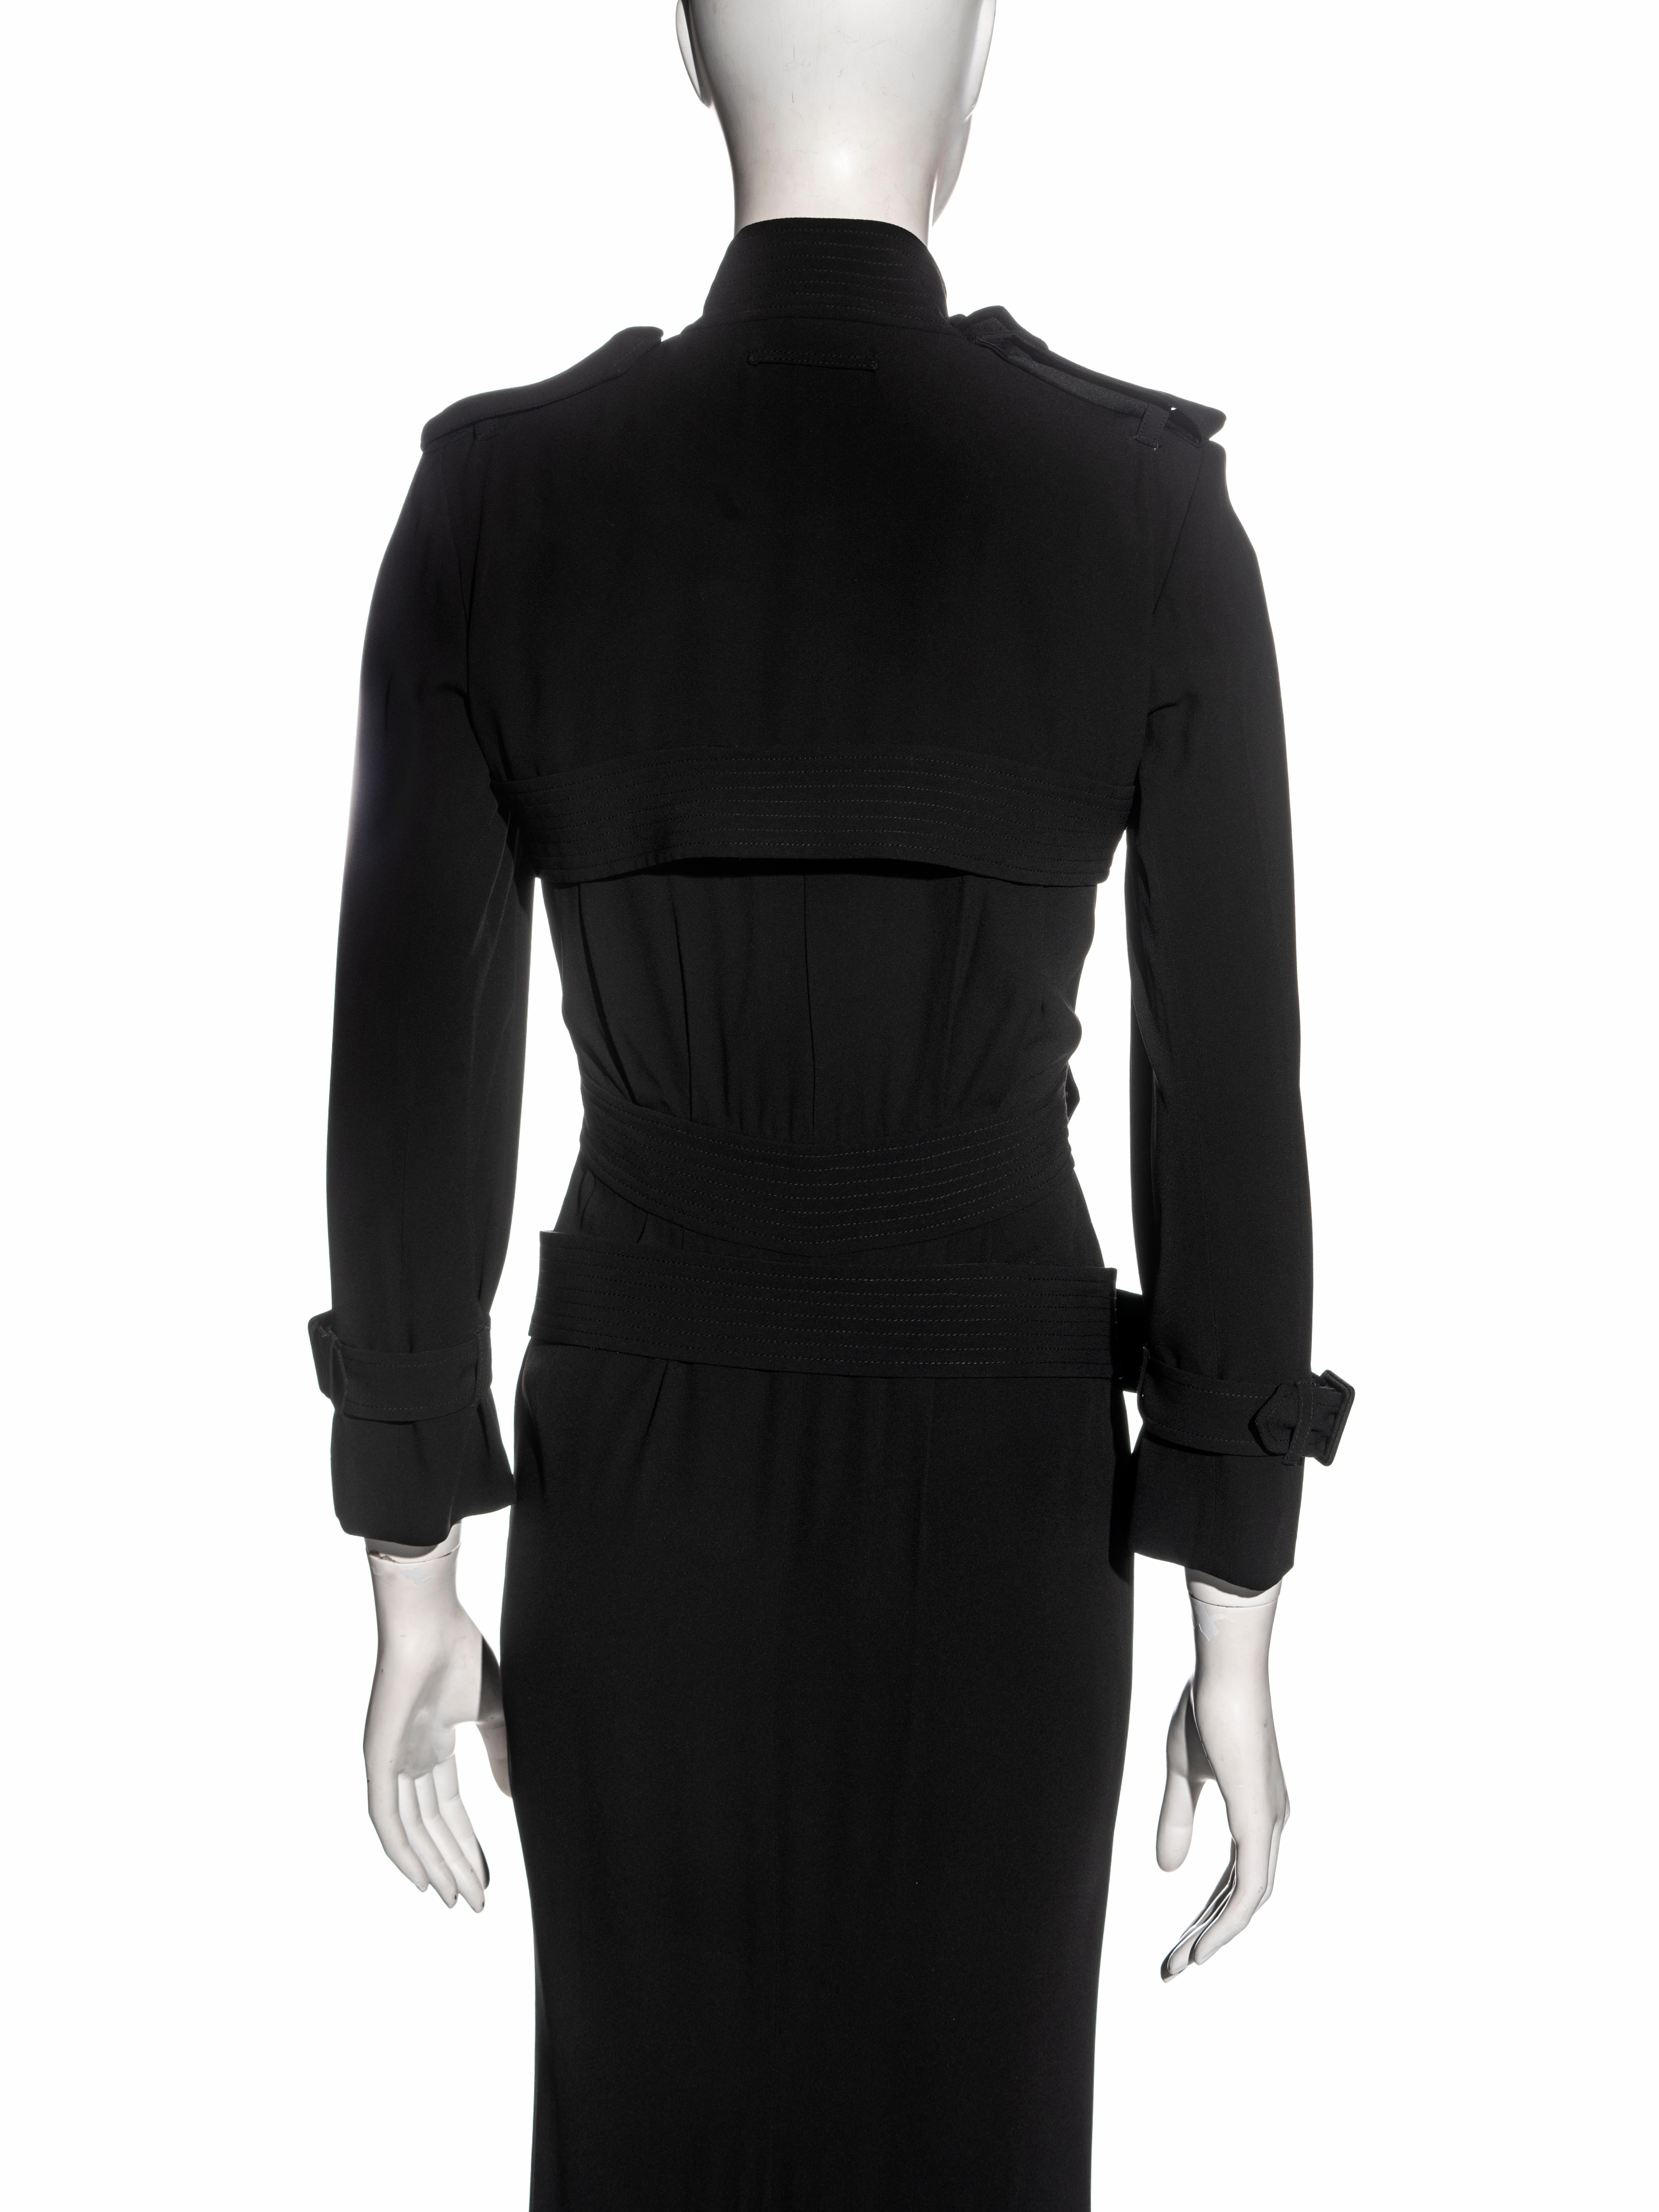 Jean Paul Gaultier black rayon shirt dress with bondage belts, fw 2009 For Sale 4